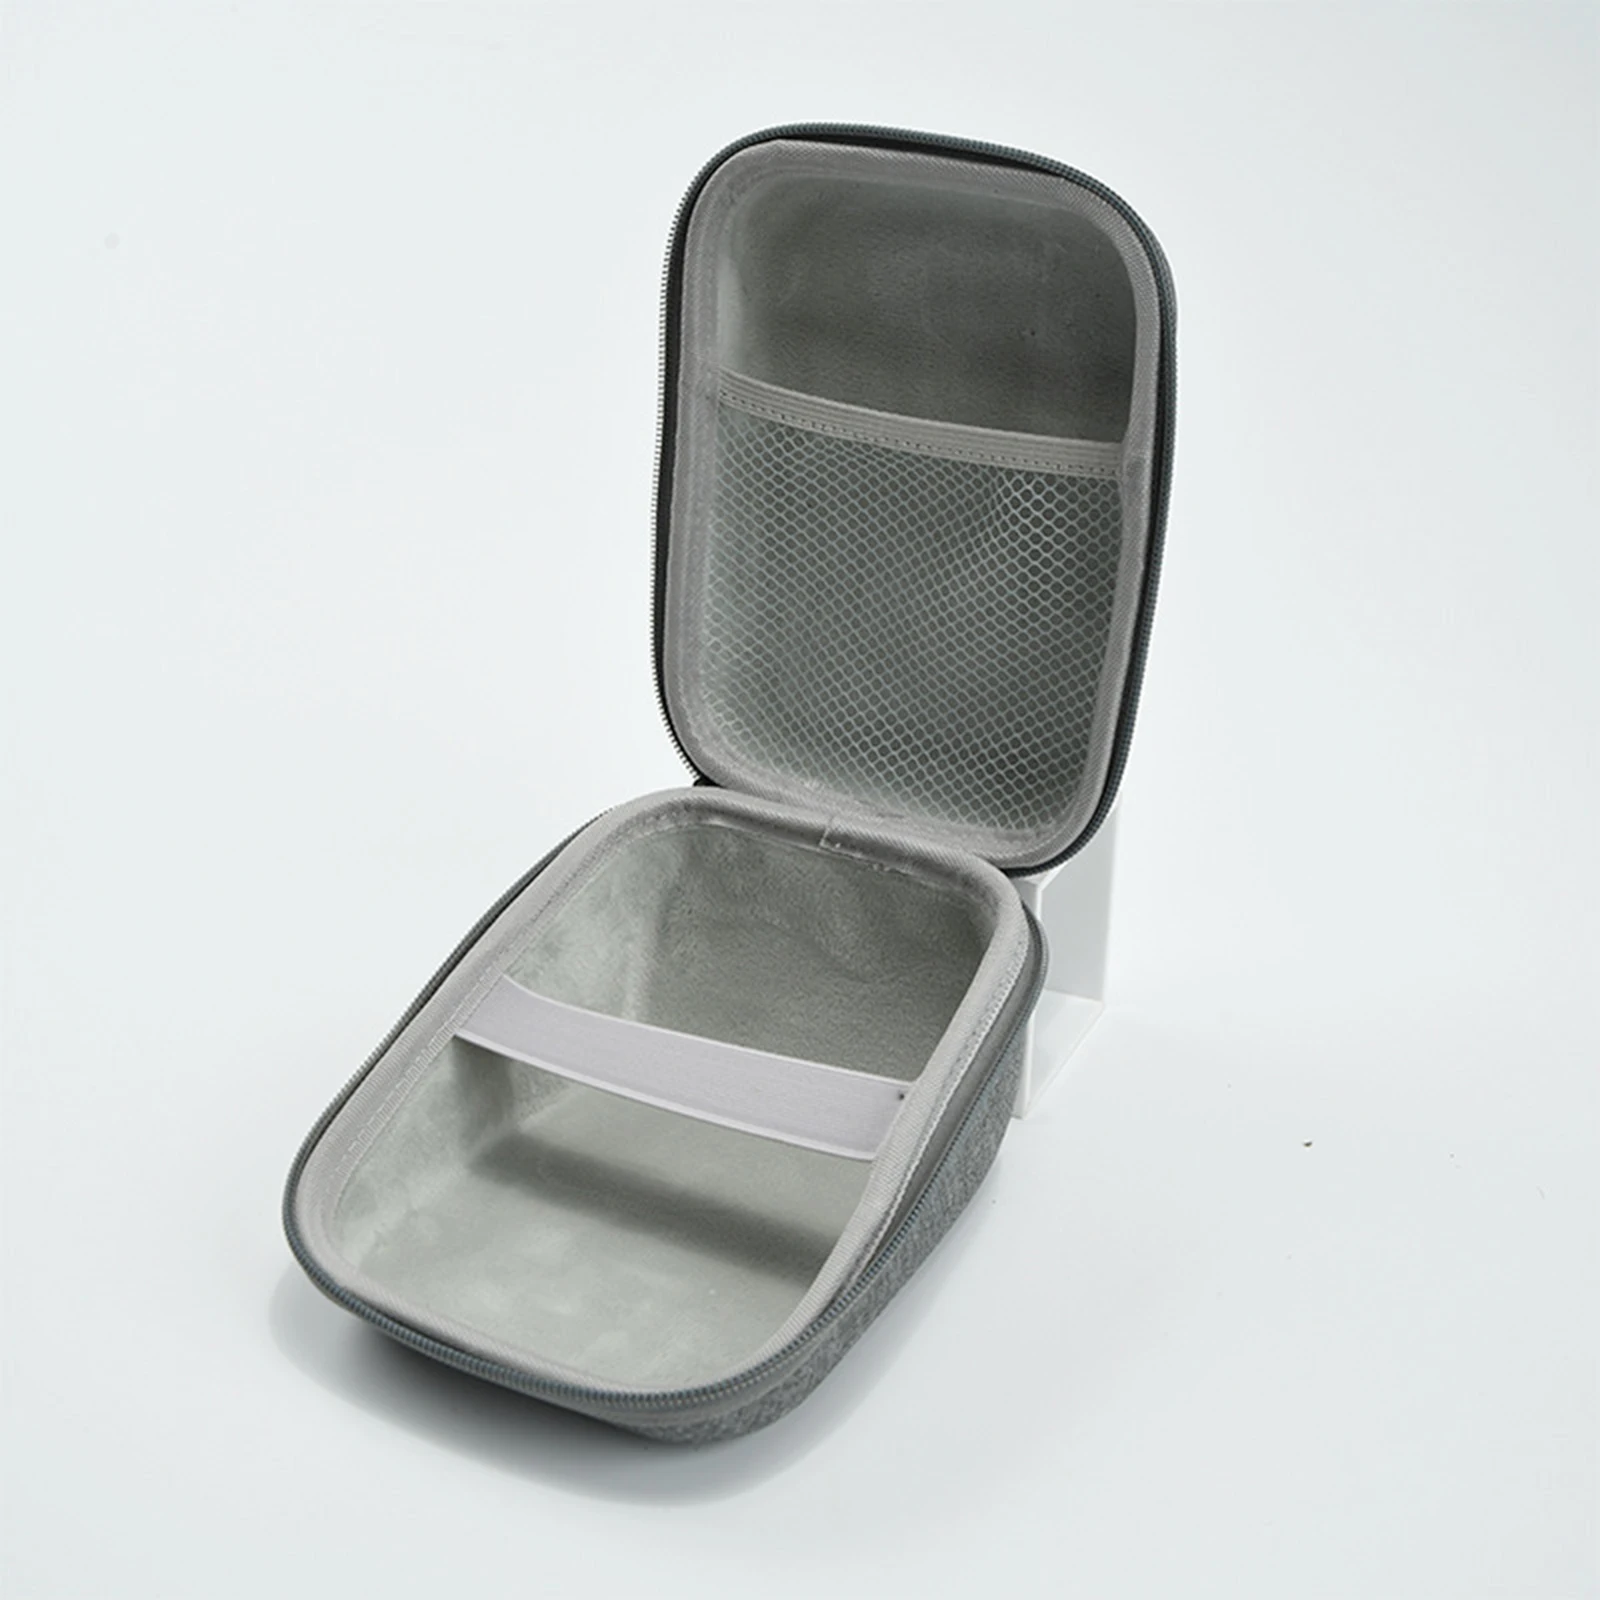  Elonbo Carrying Case for Omron Platinum BP5450 BP5350